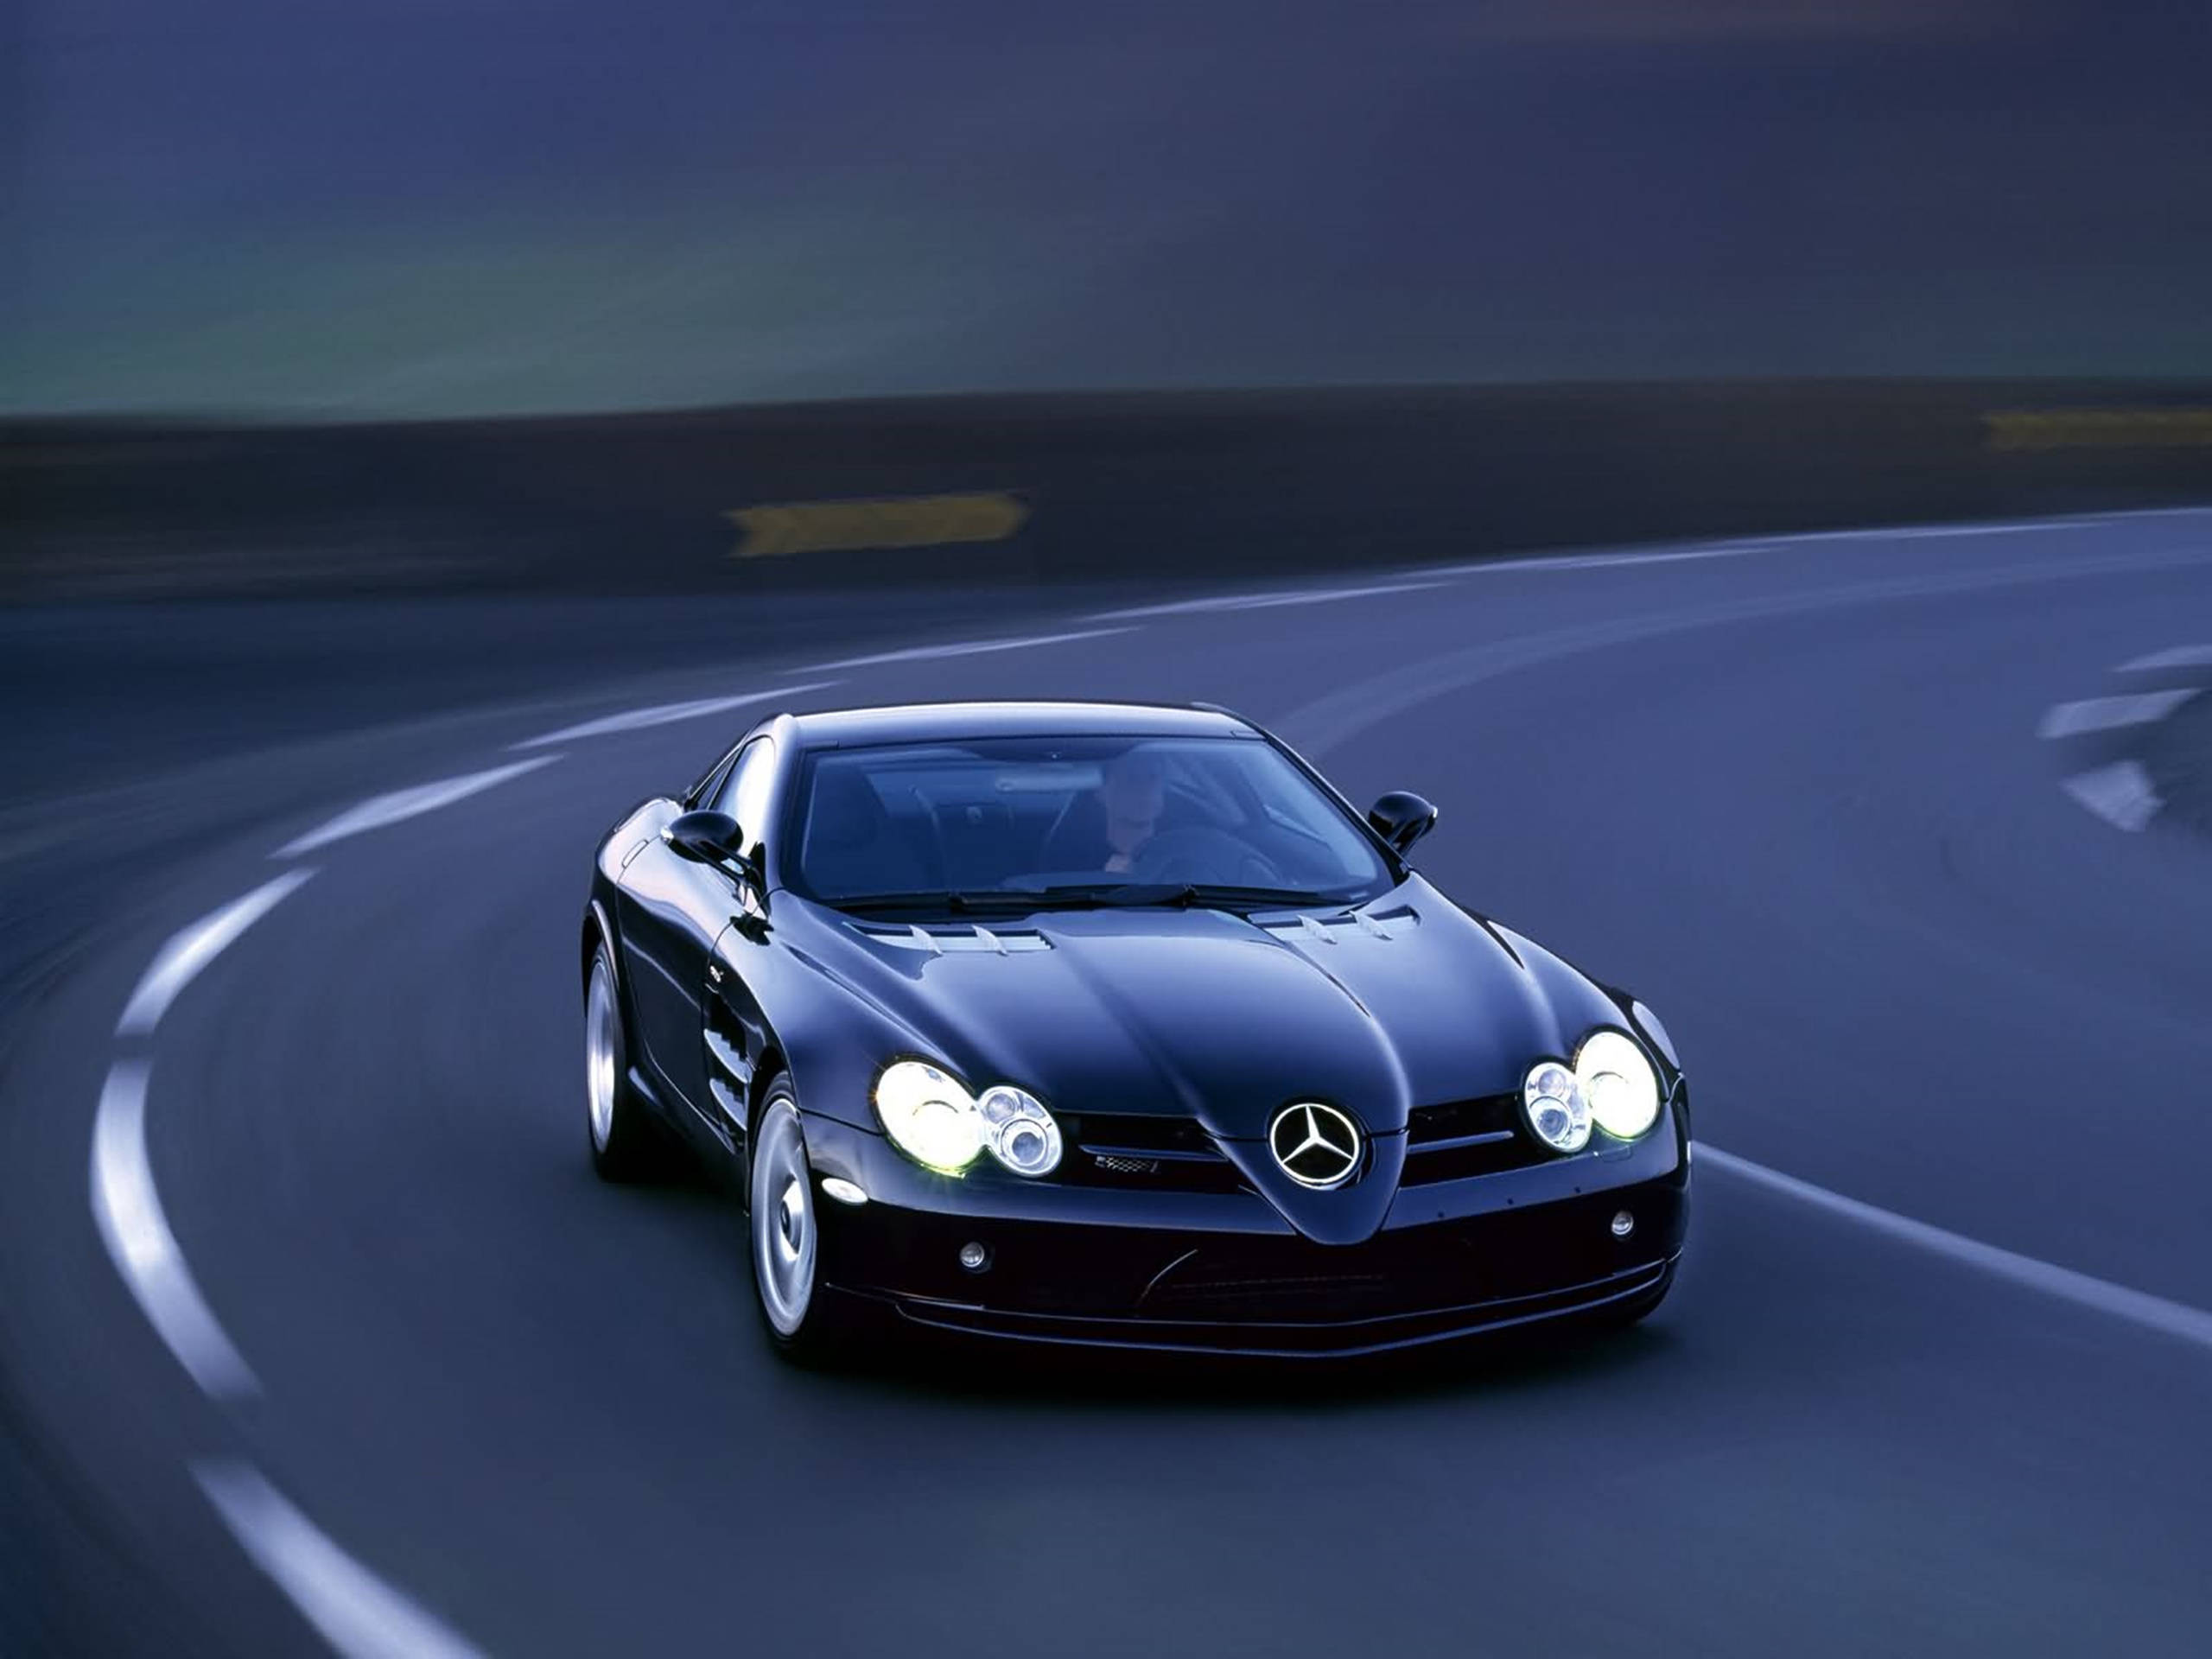 Caption: Sleek Black Mercedes-Benz Coupe in High Definition Wallpaper